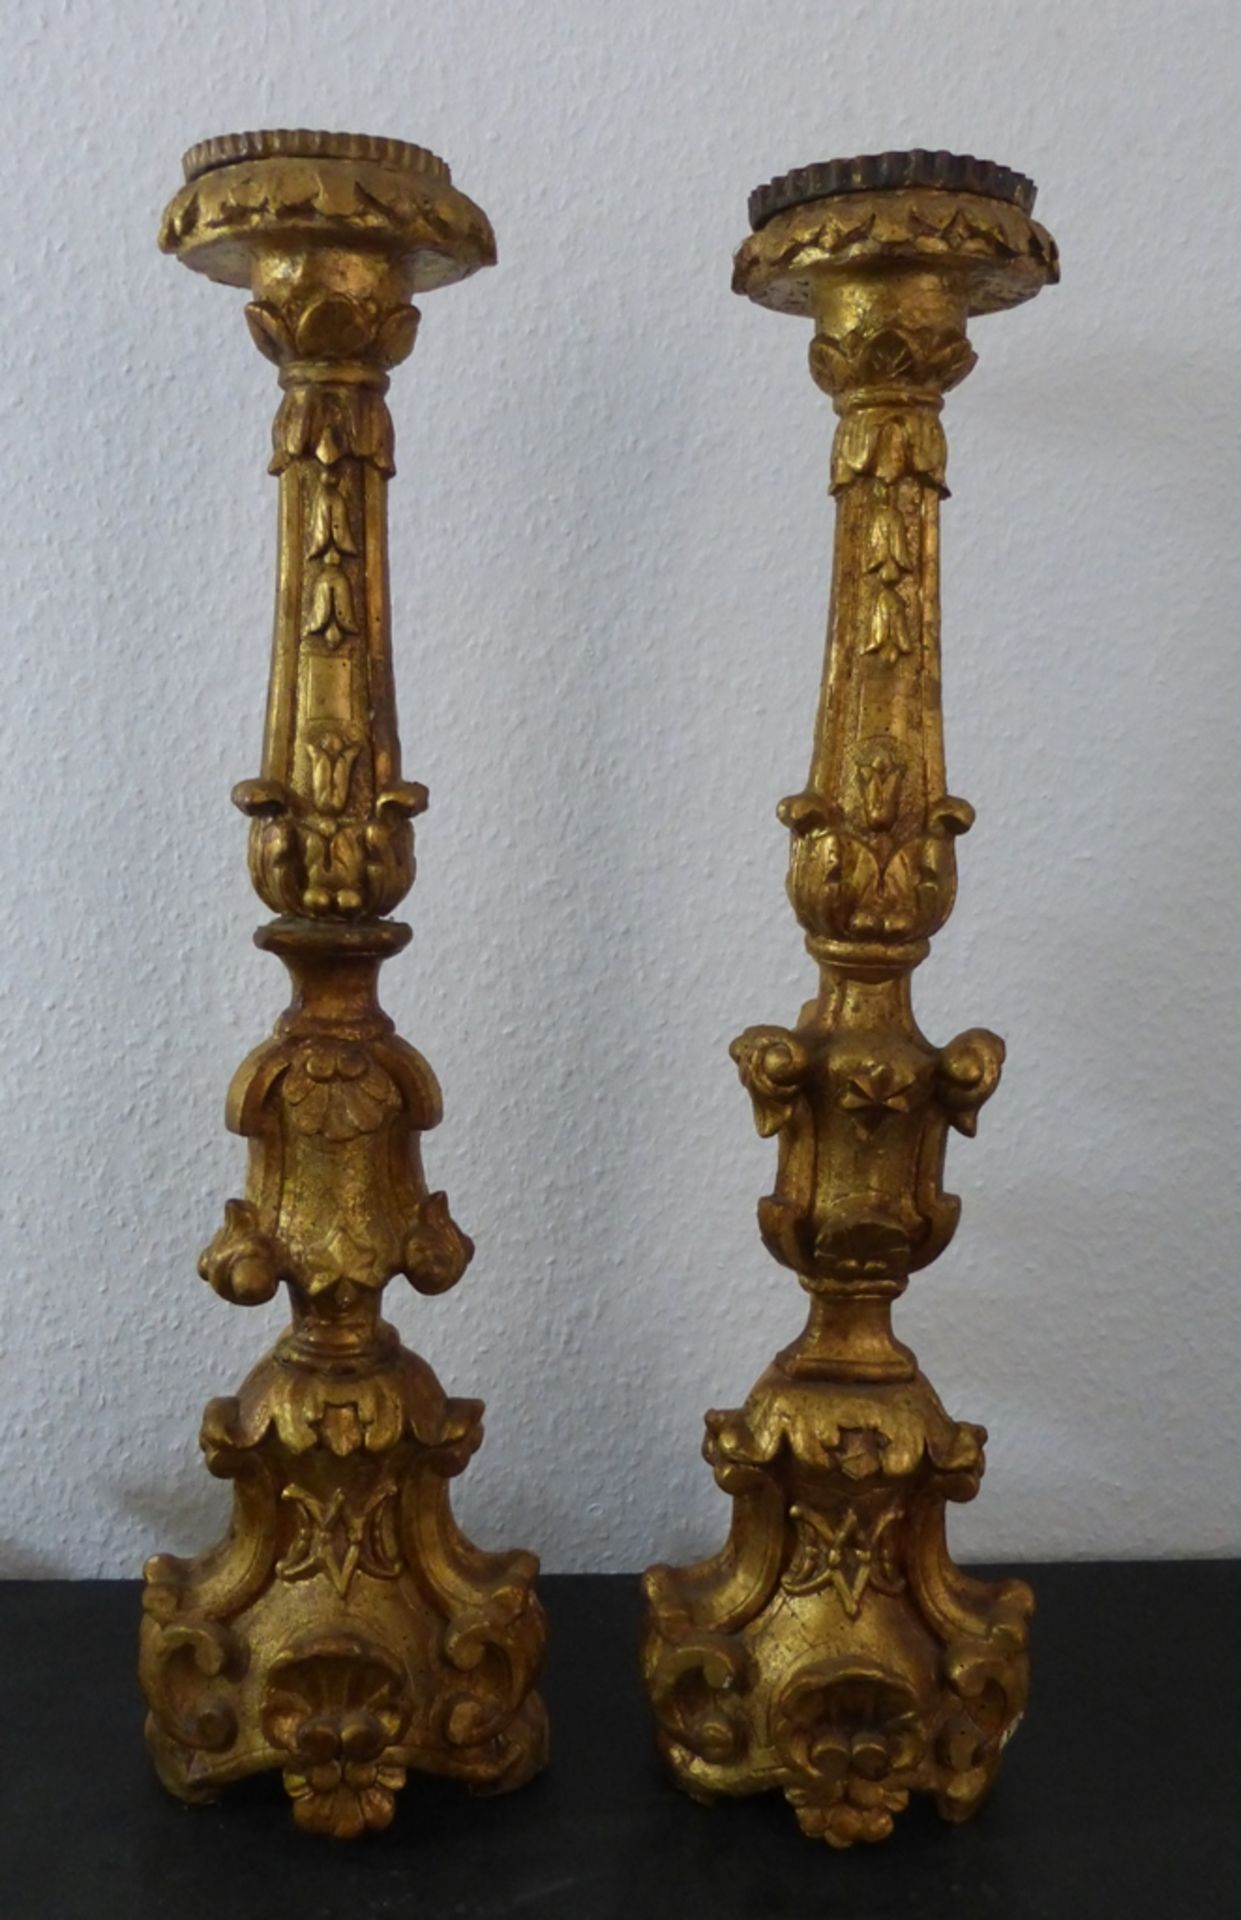 Paar Barocke Kerzenleuchter, Süddeutschland, 18.Jh., zwei Kerzenleuchter, Holz geschnitzt und